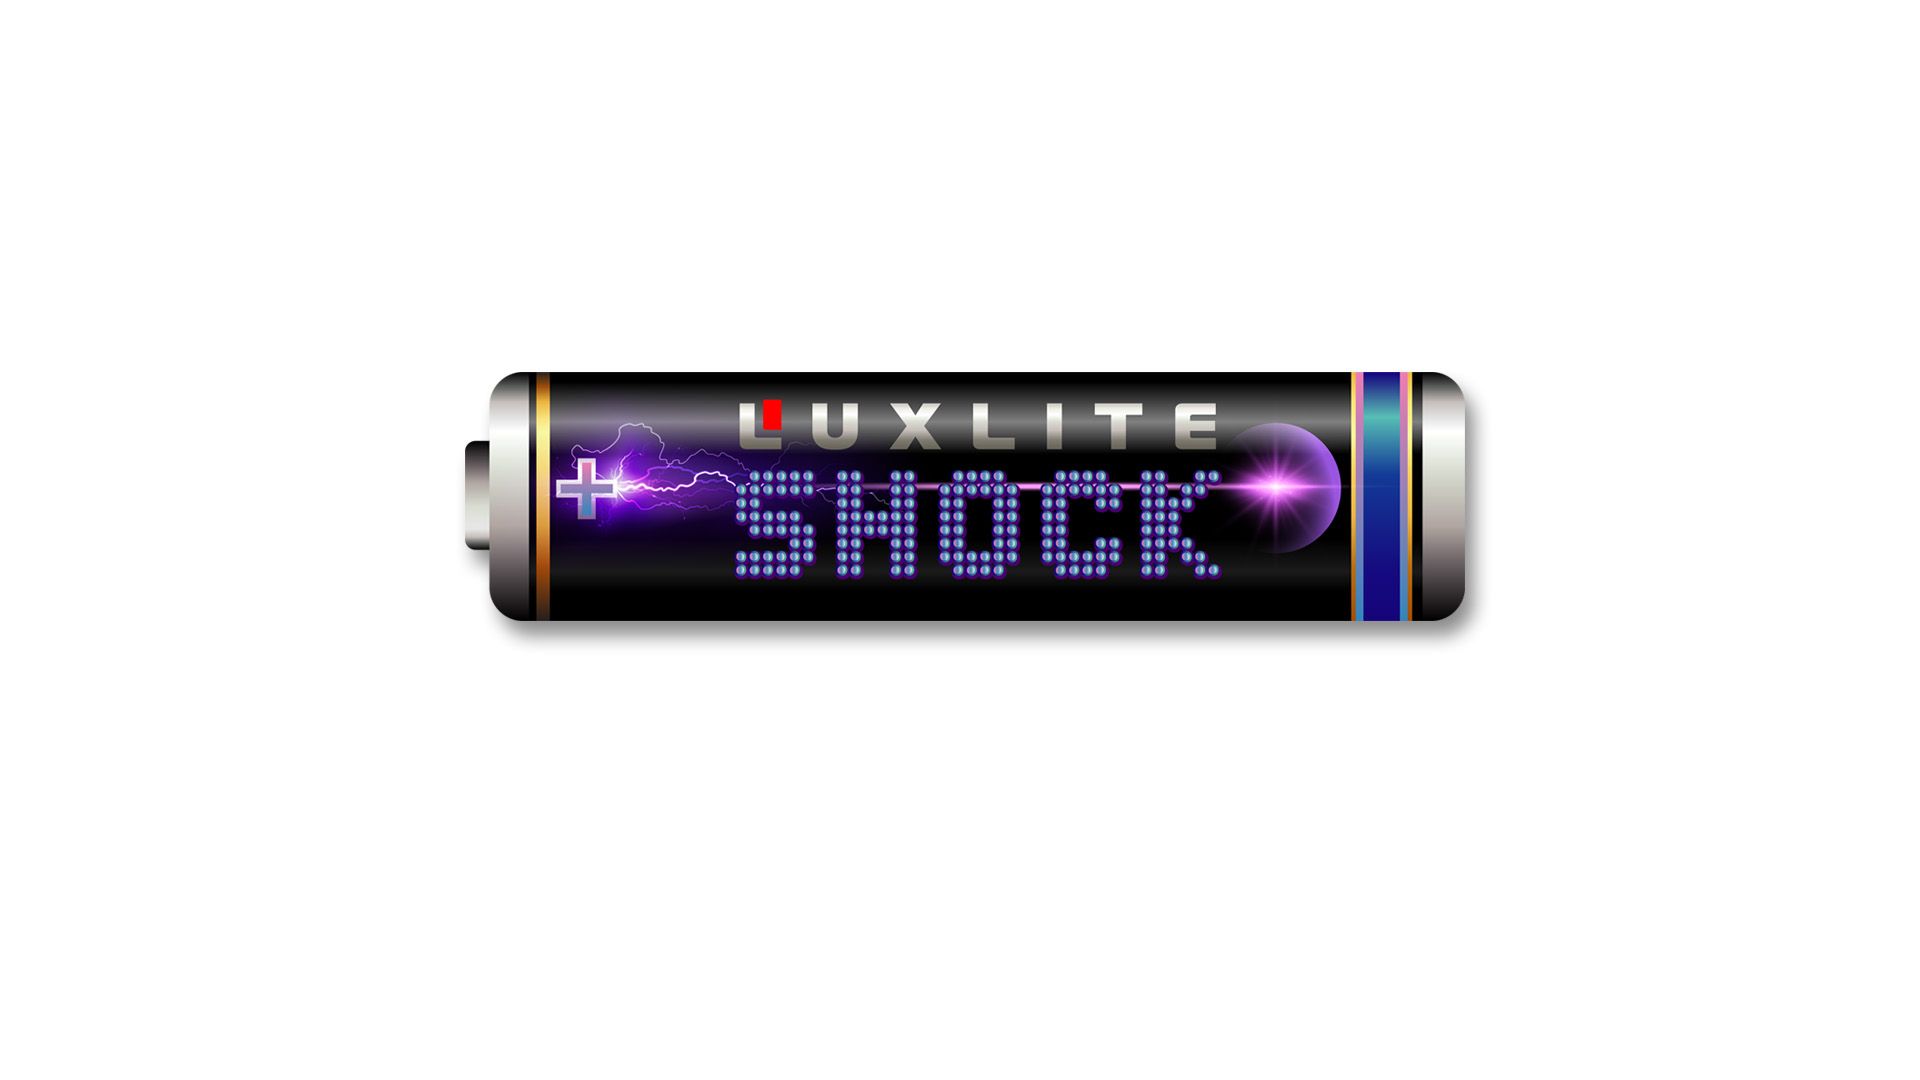 Логотип для батареек LUXLITE SHOCK - дизайнер aleksmaster